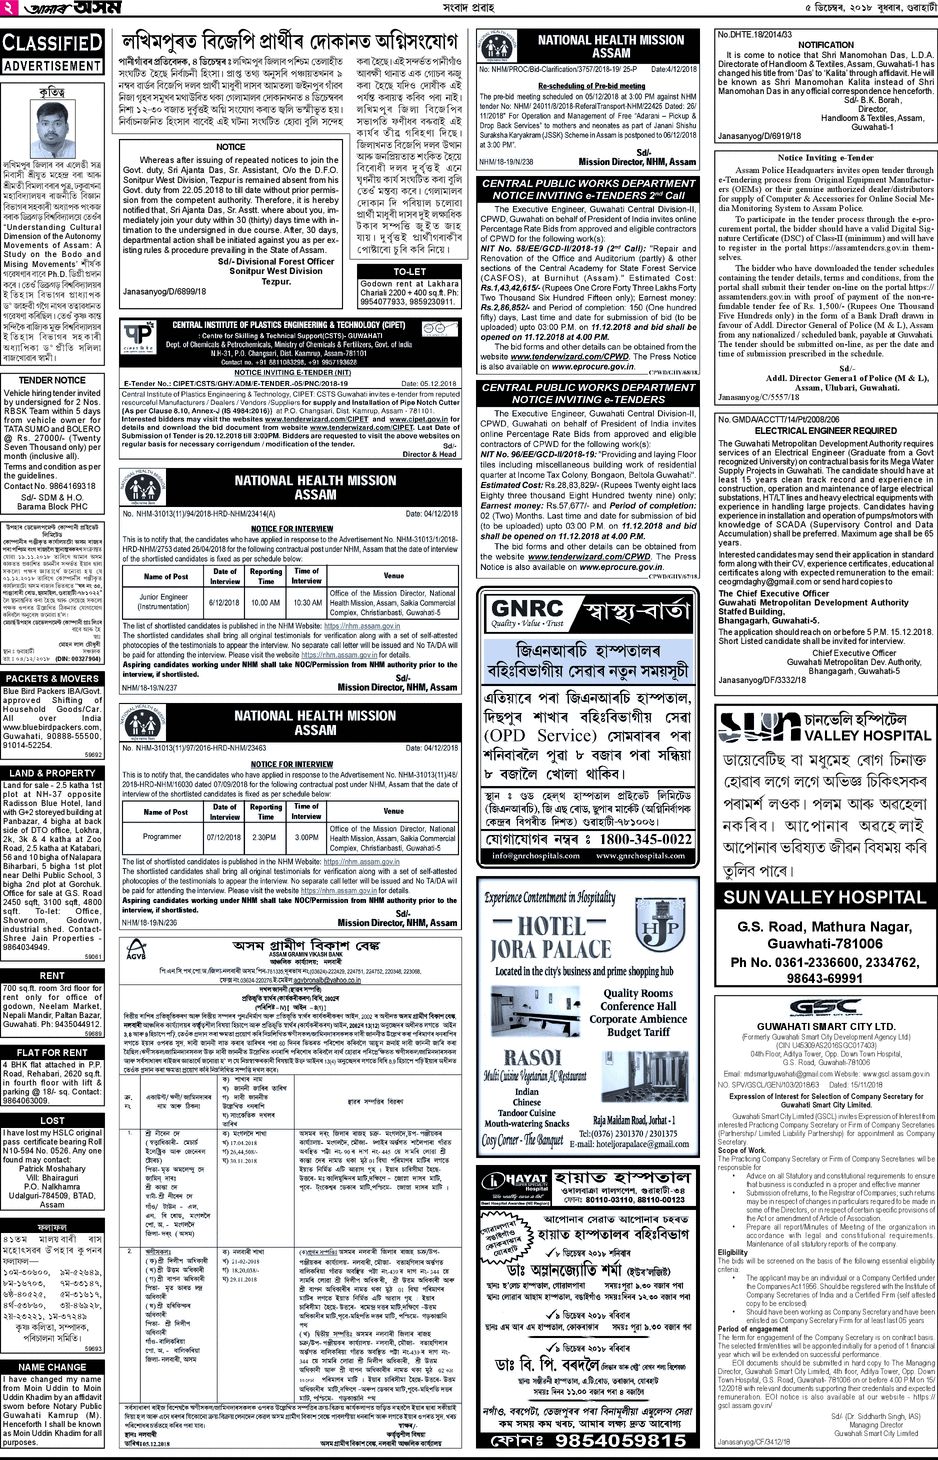 Amar Asom  Newspaper Classified Ad Booking